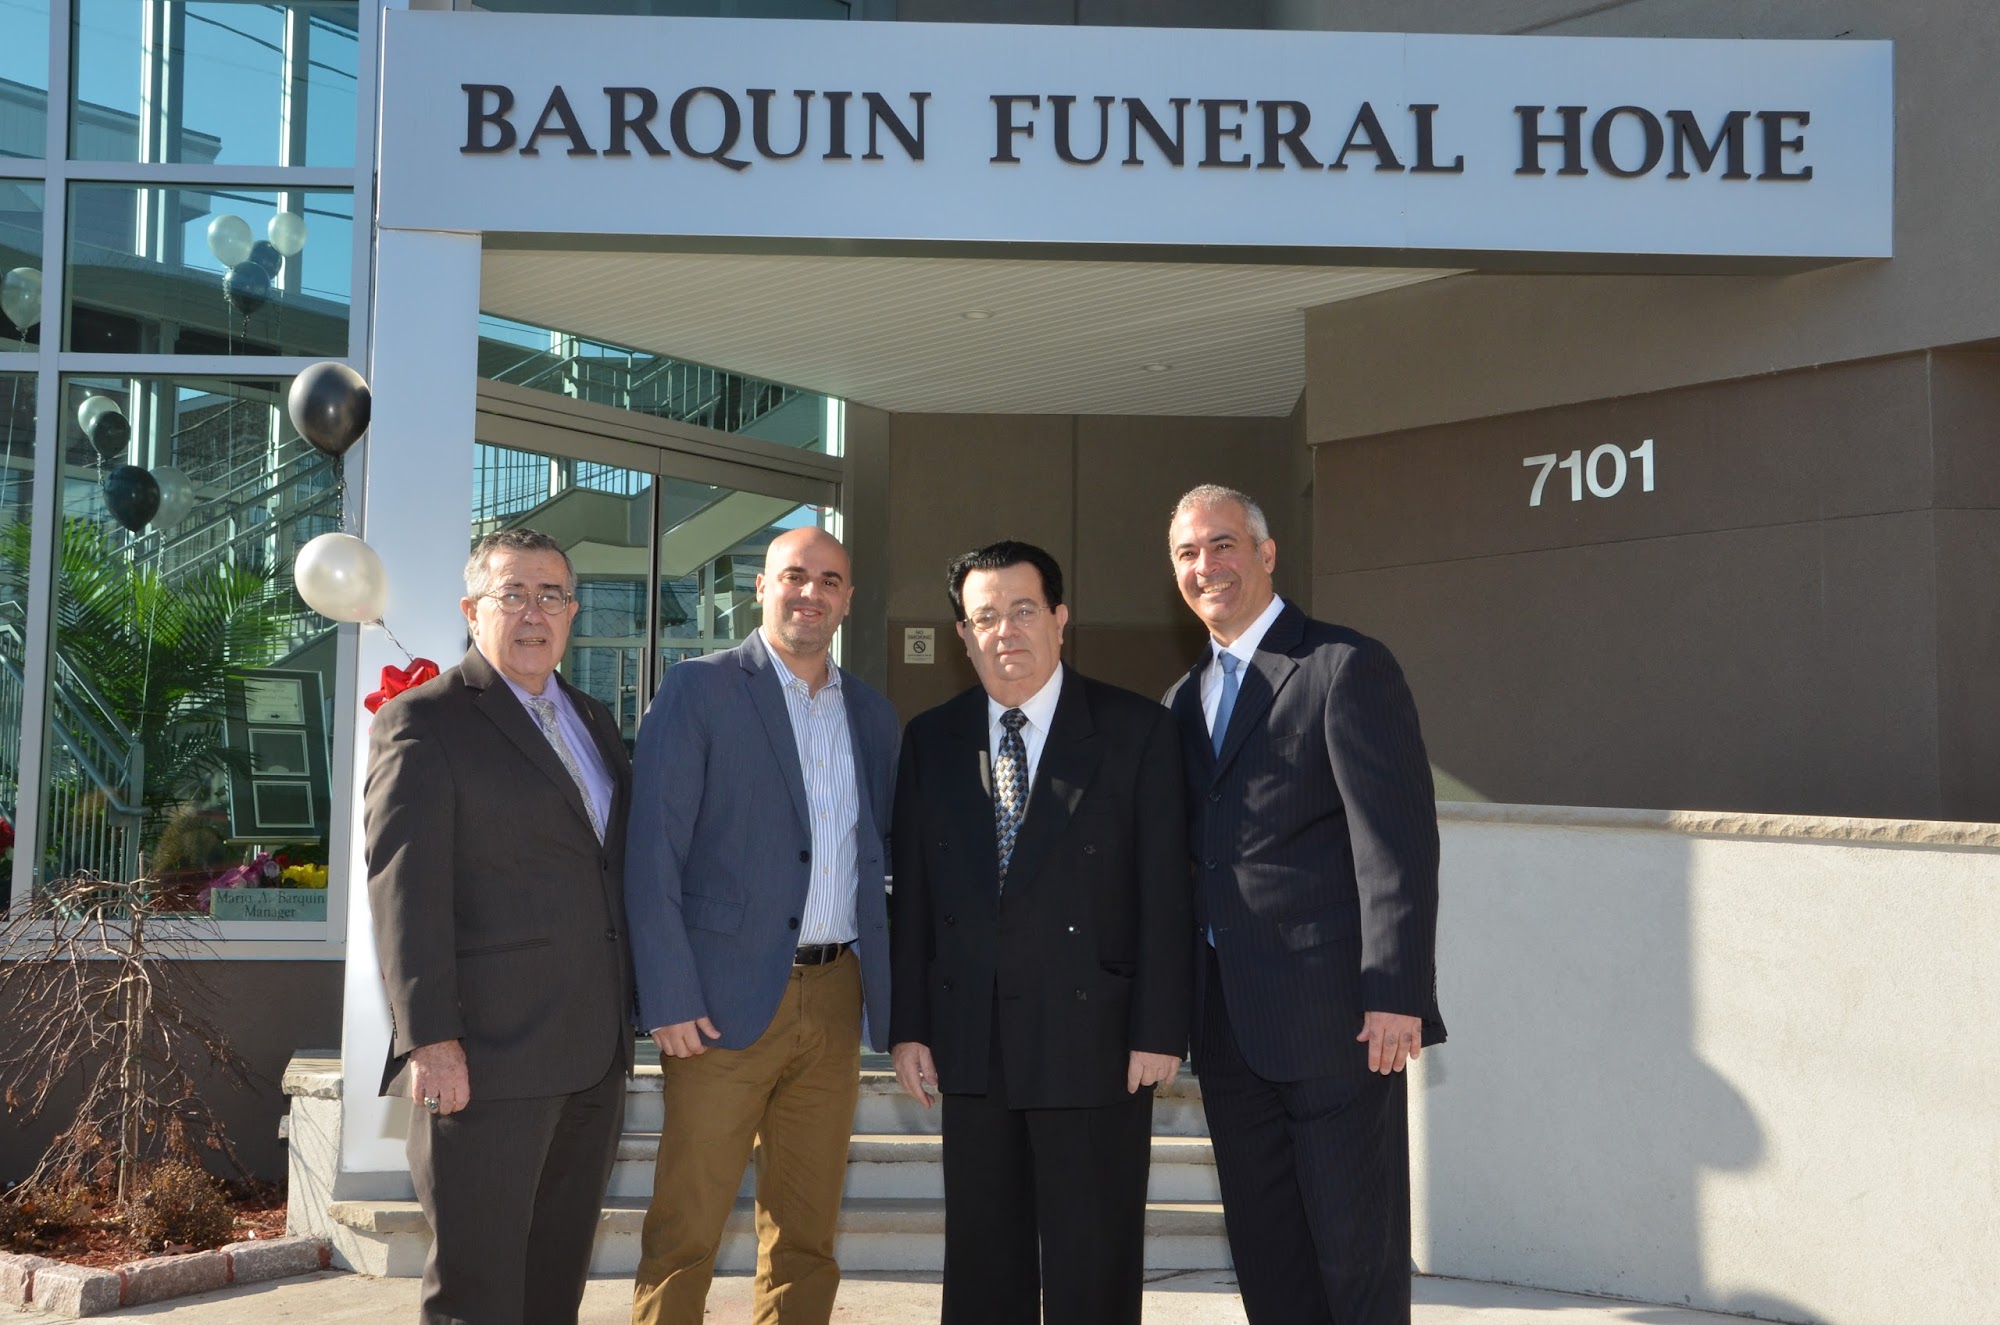 Barquin Funeral Home 7101 Broadway, Guttenberg New Jersey 07093